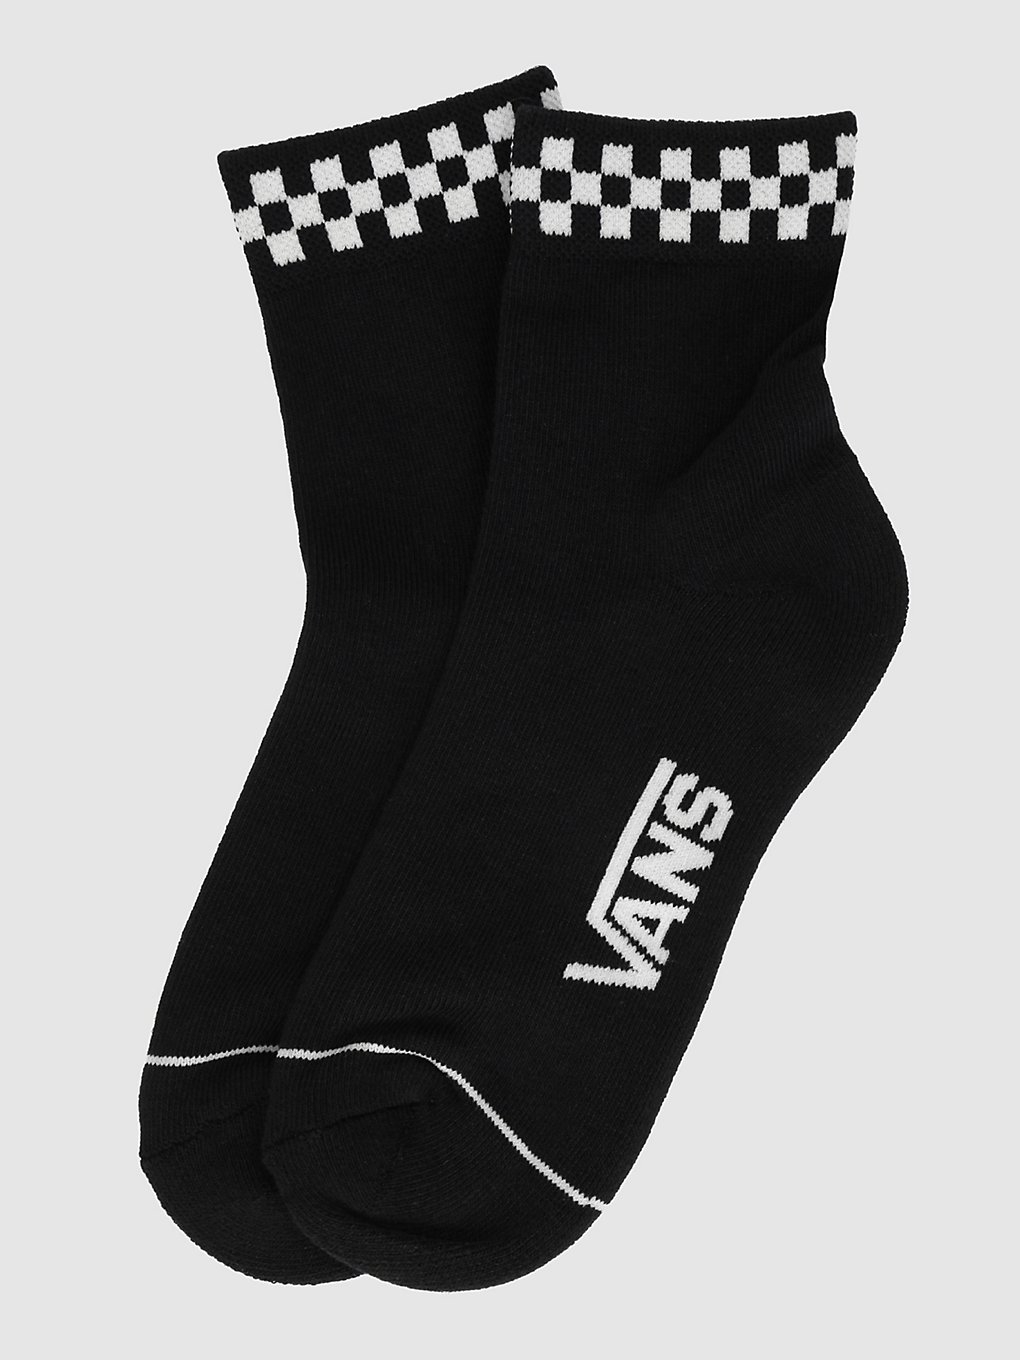 Vans Peek-A-Check Crew (6.5-10) Socken black kaufen